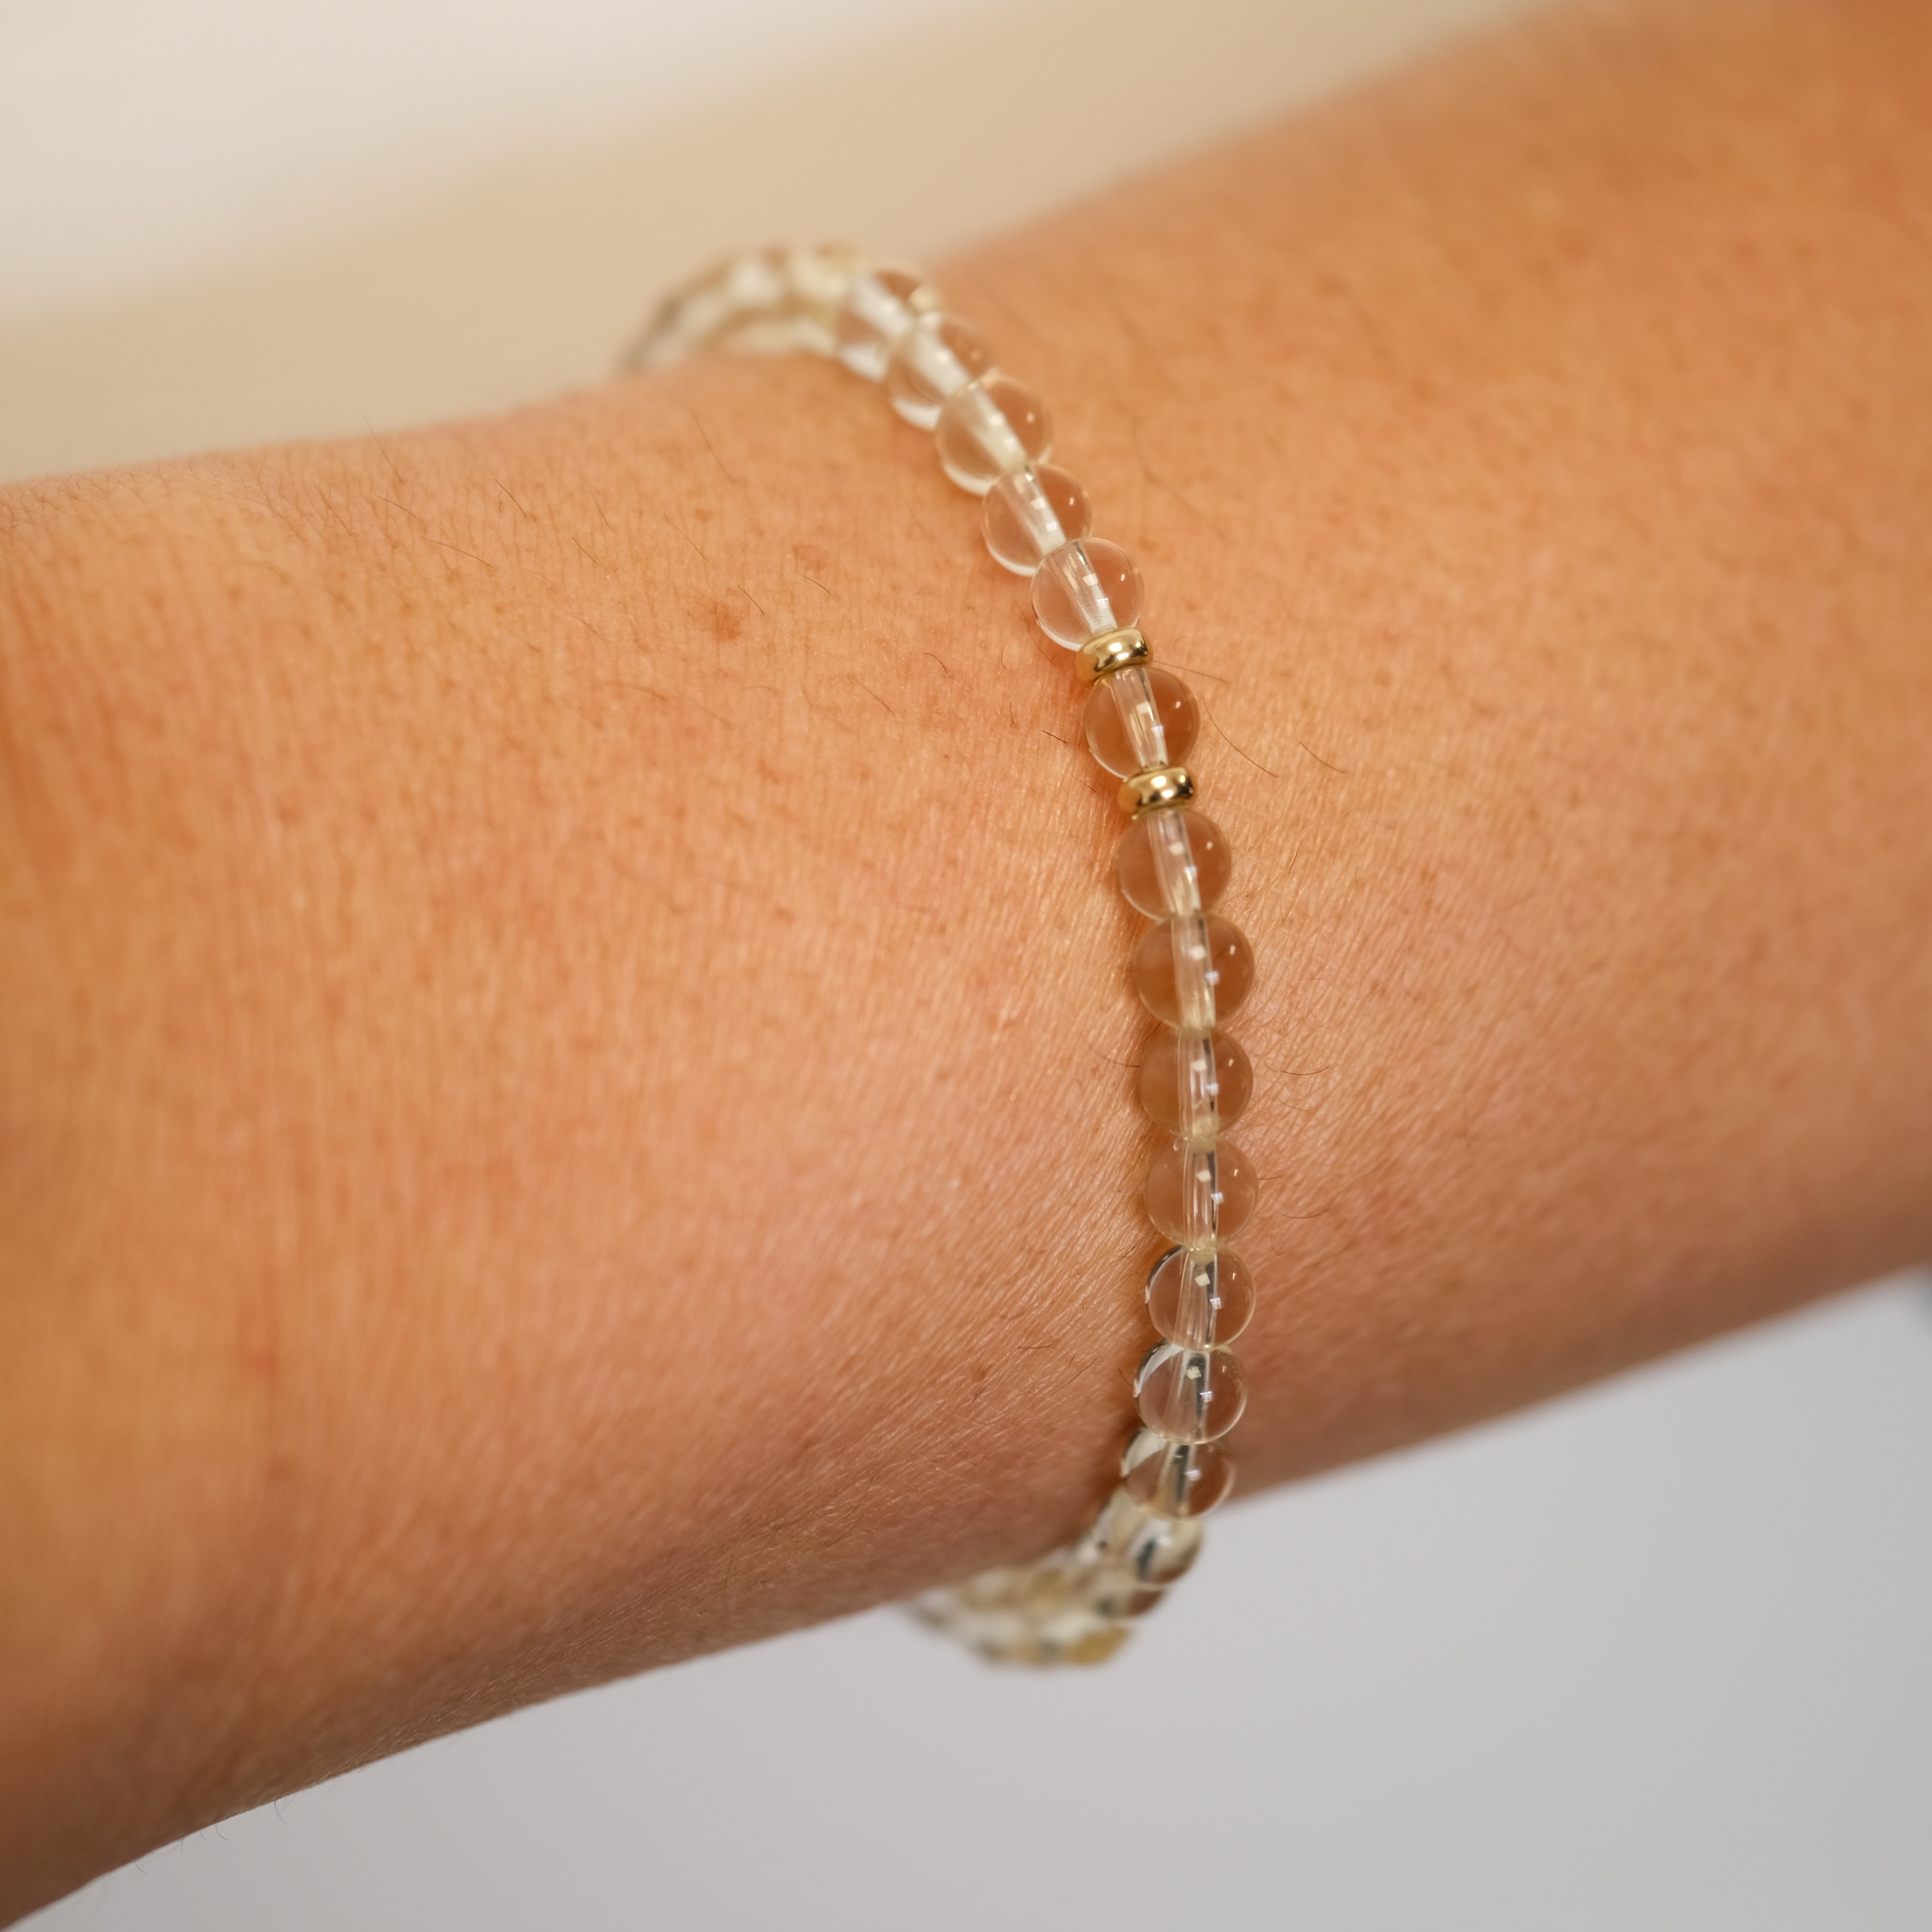 4mm citrine bracelet worn on a model's wrist